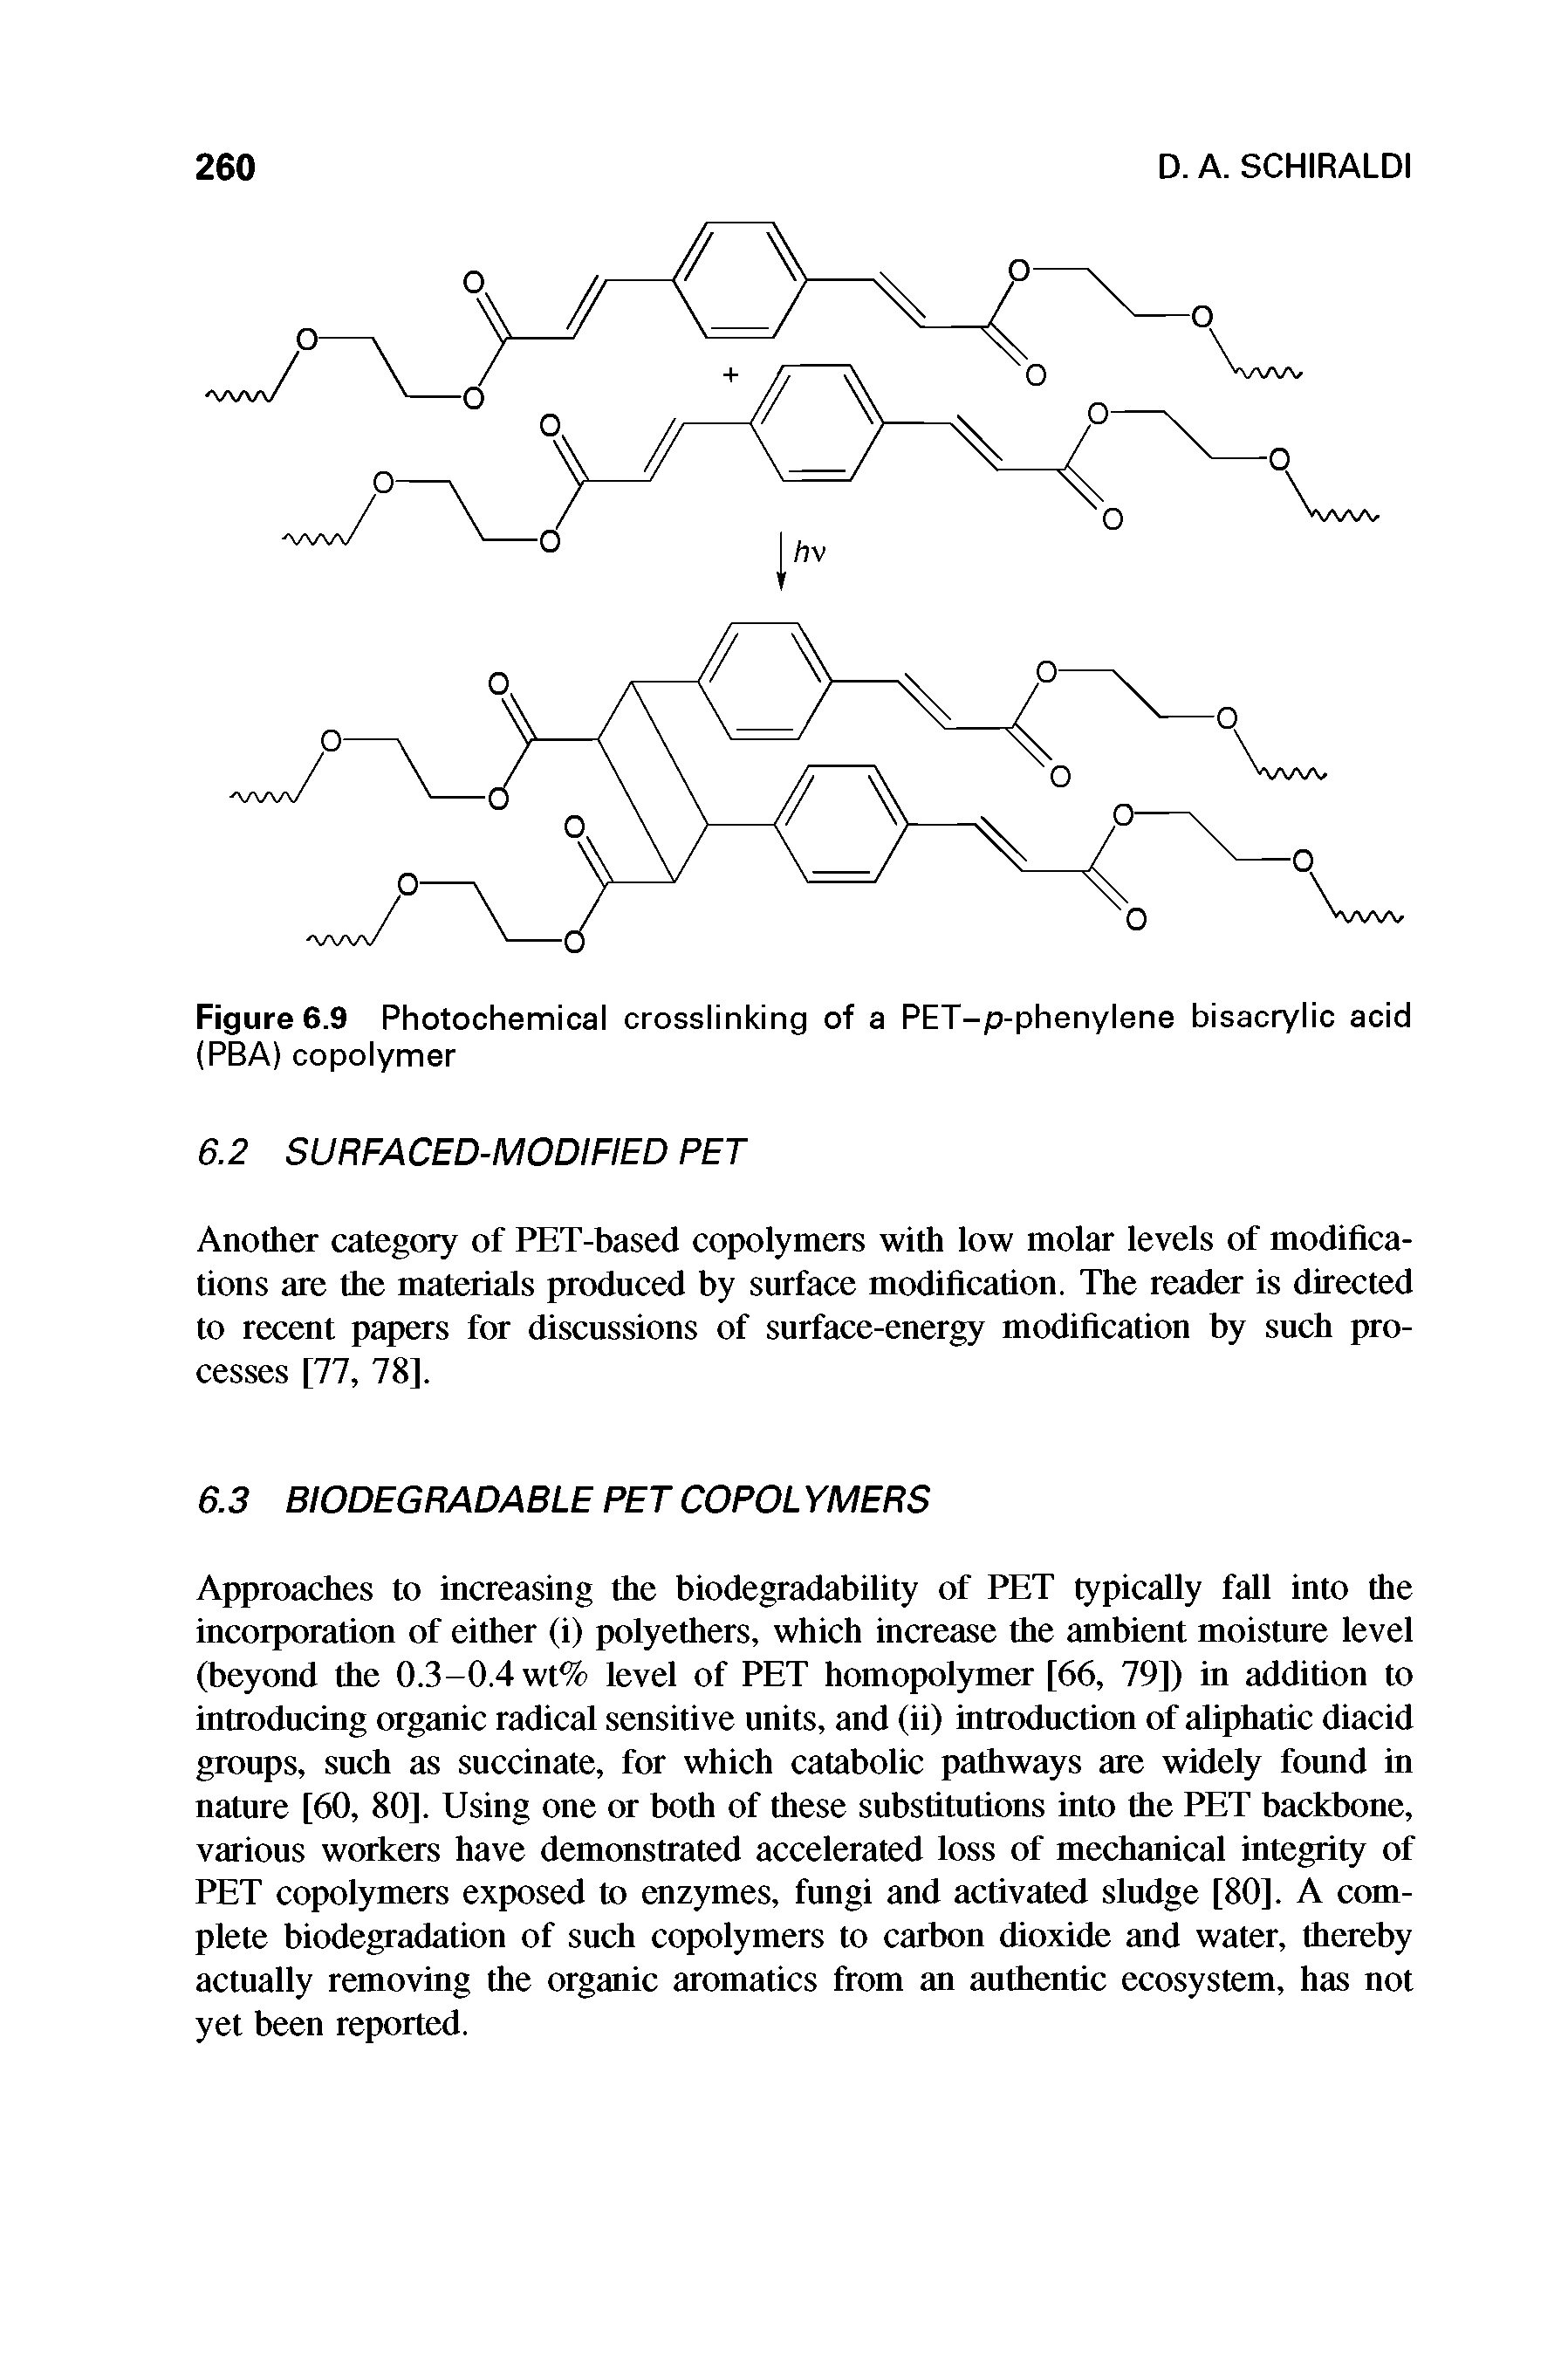 Figure 6.9 Photochemical crosslinking of a PET-p-phenylene bisacrylic acid (PBA) copolymer...